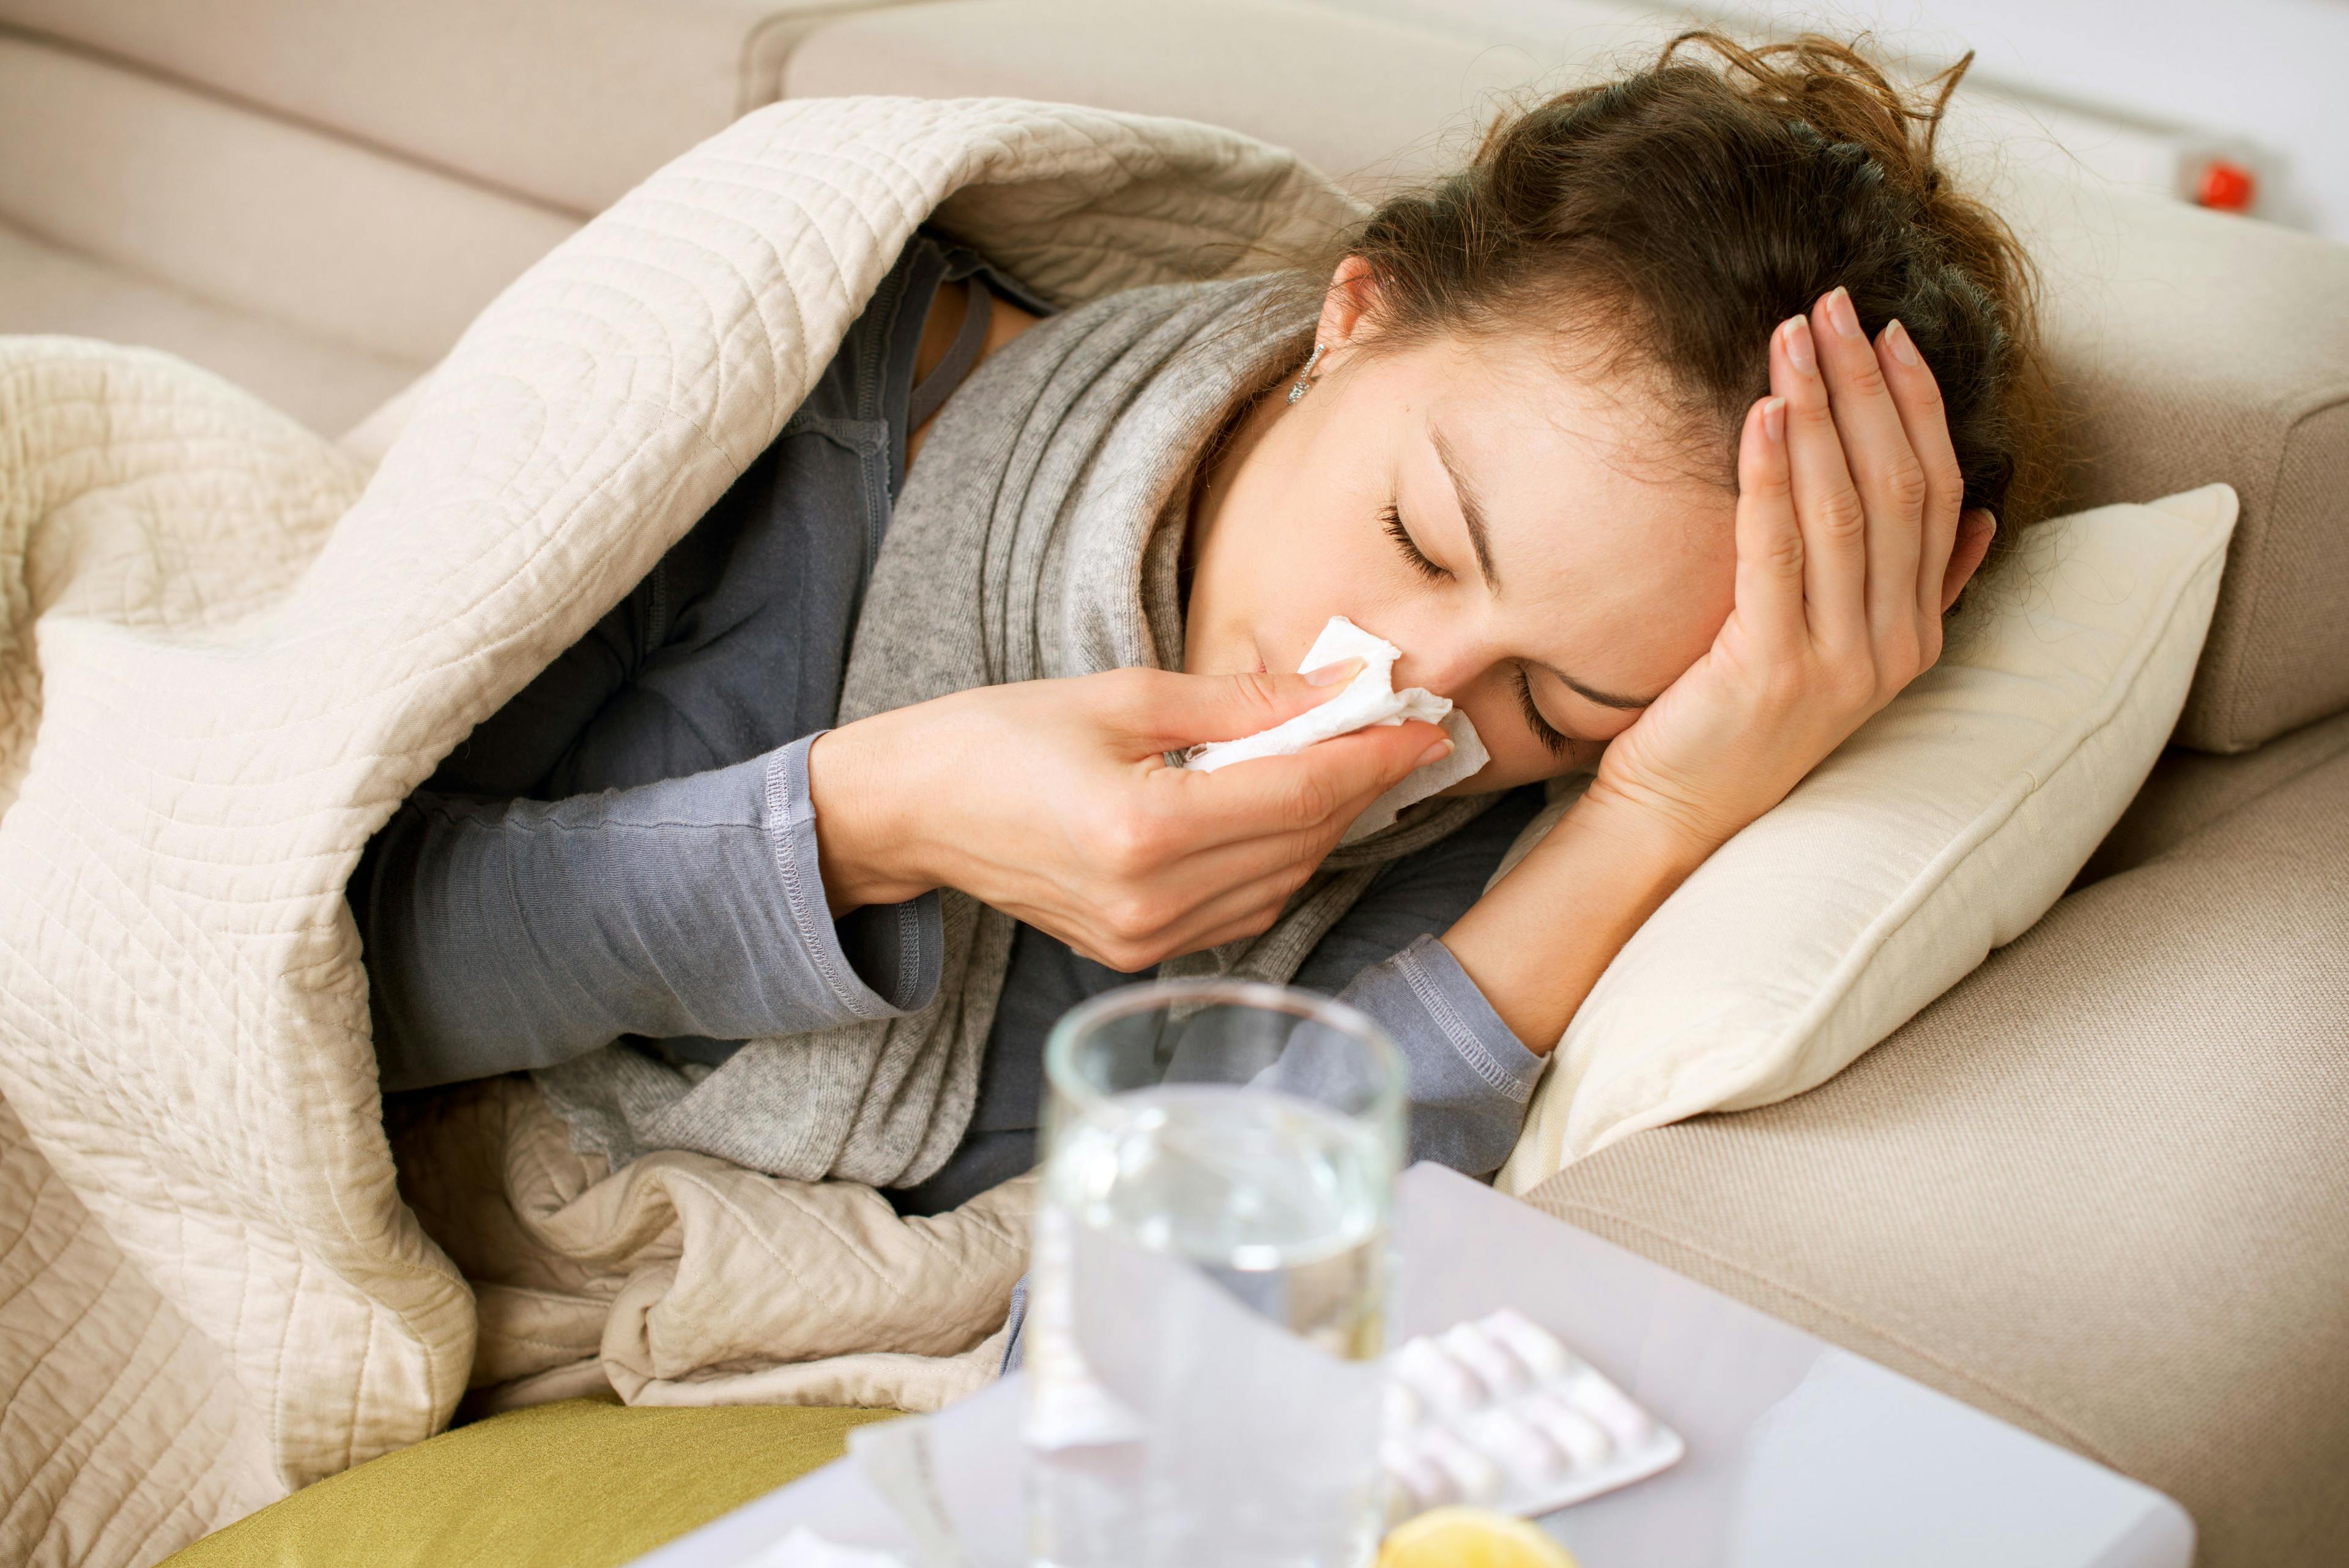 Sick Woman. Flu. Woman Caught Cold. Sneezing into Tissue - Image credit: Subbotina Anna | stock.adobe.com